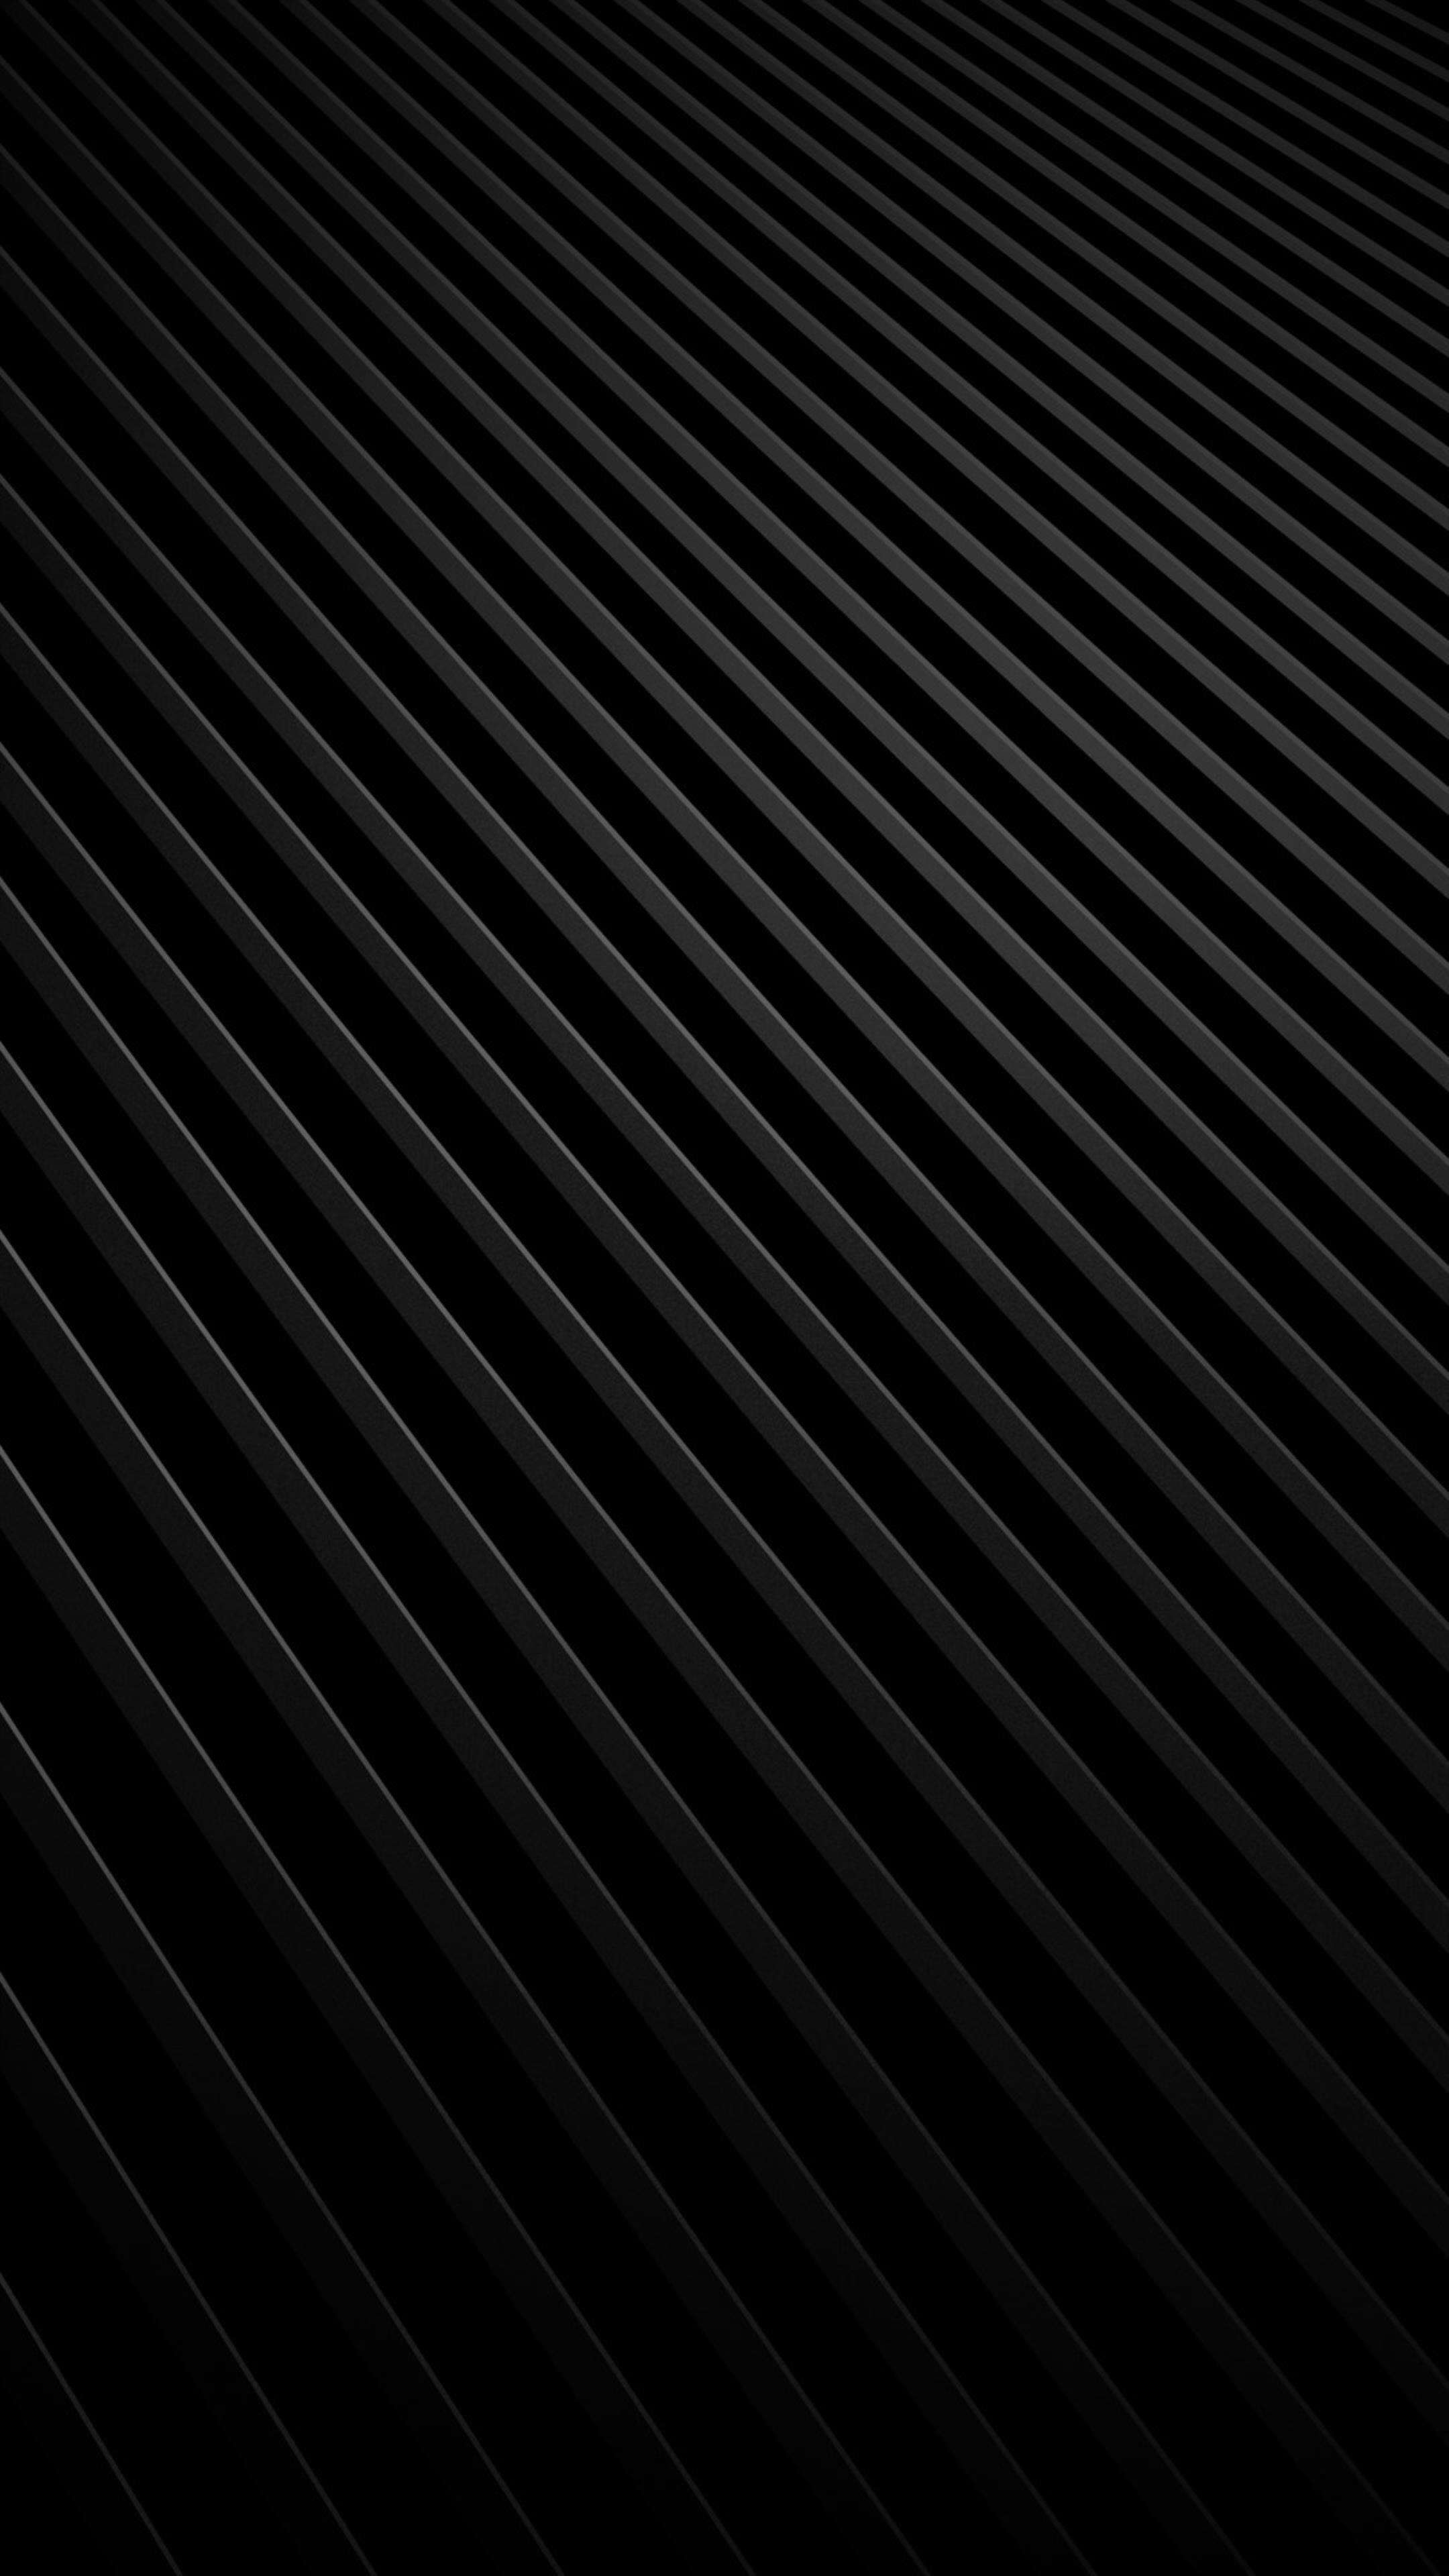 Vertical Blind 4K Phone Wallpaper